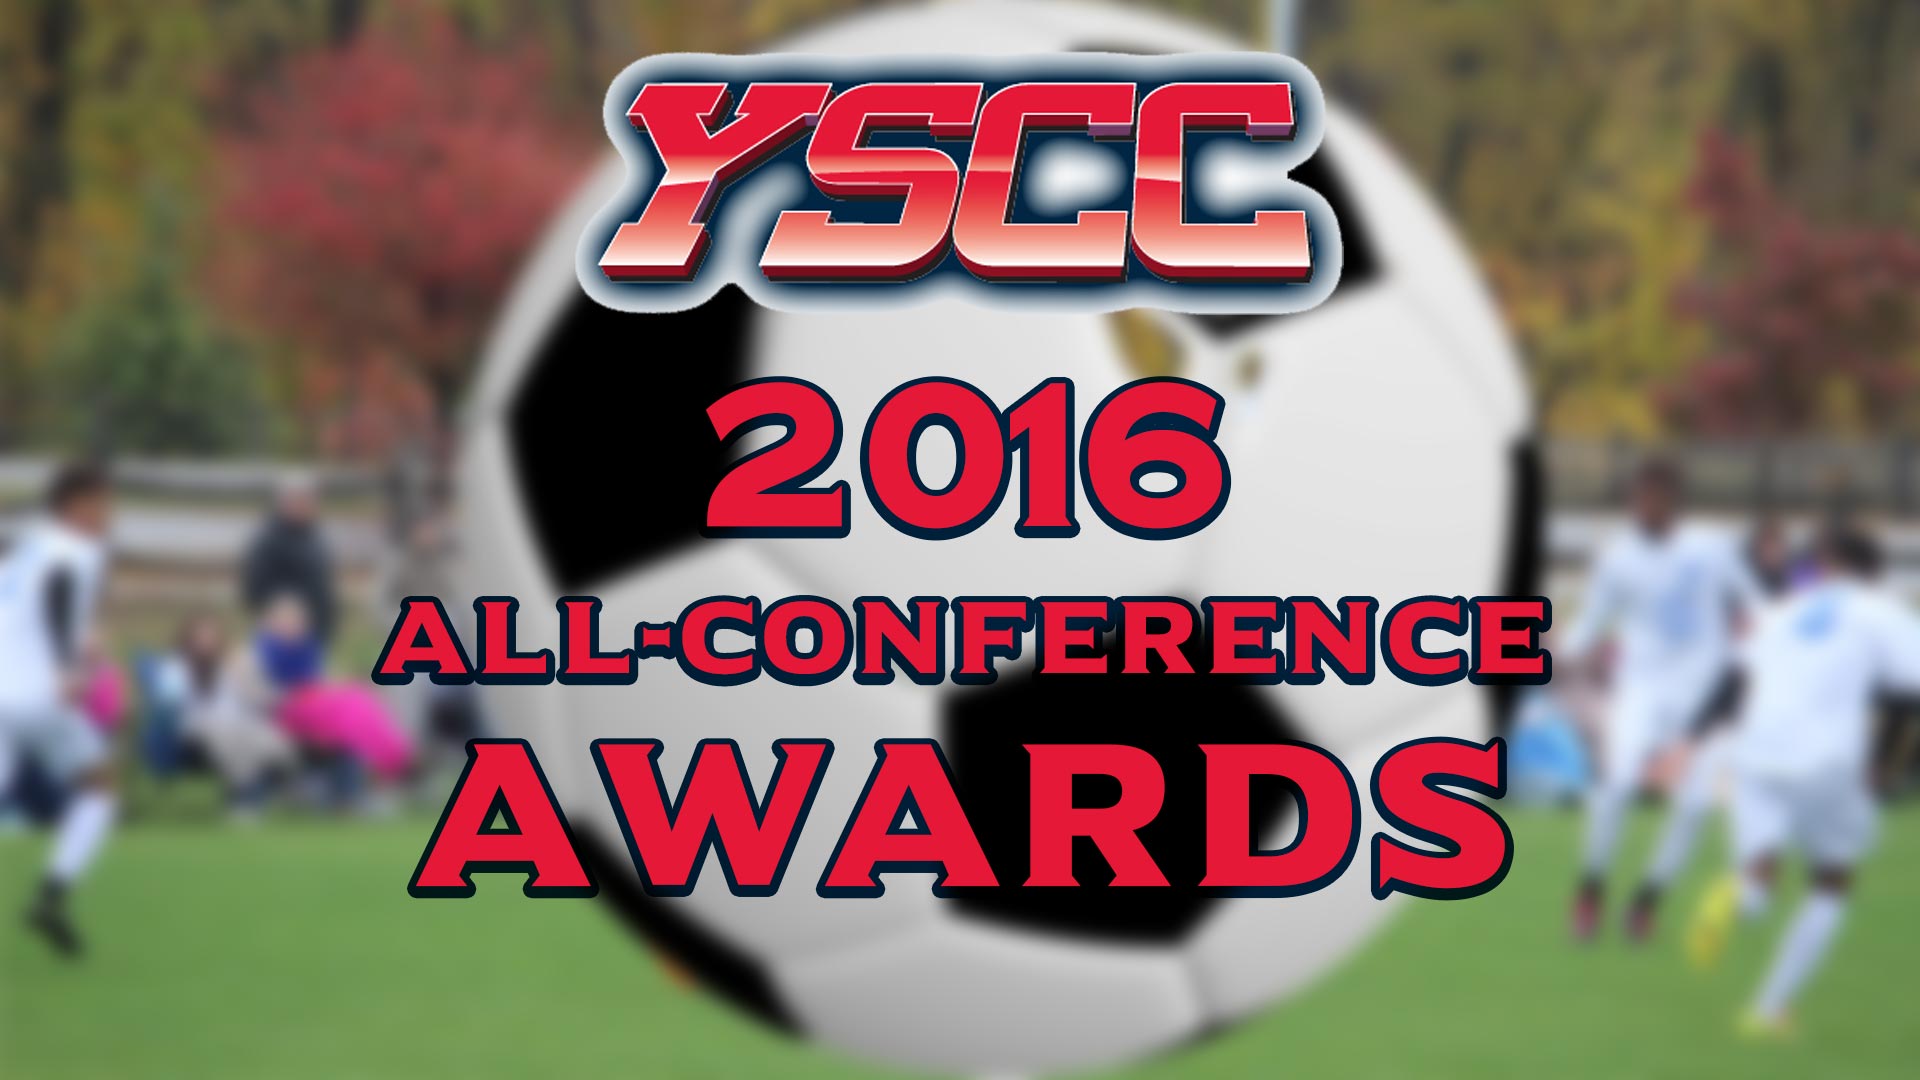 2016 YSCC Soccer Awards Announced